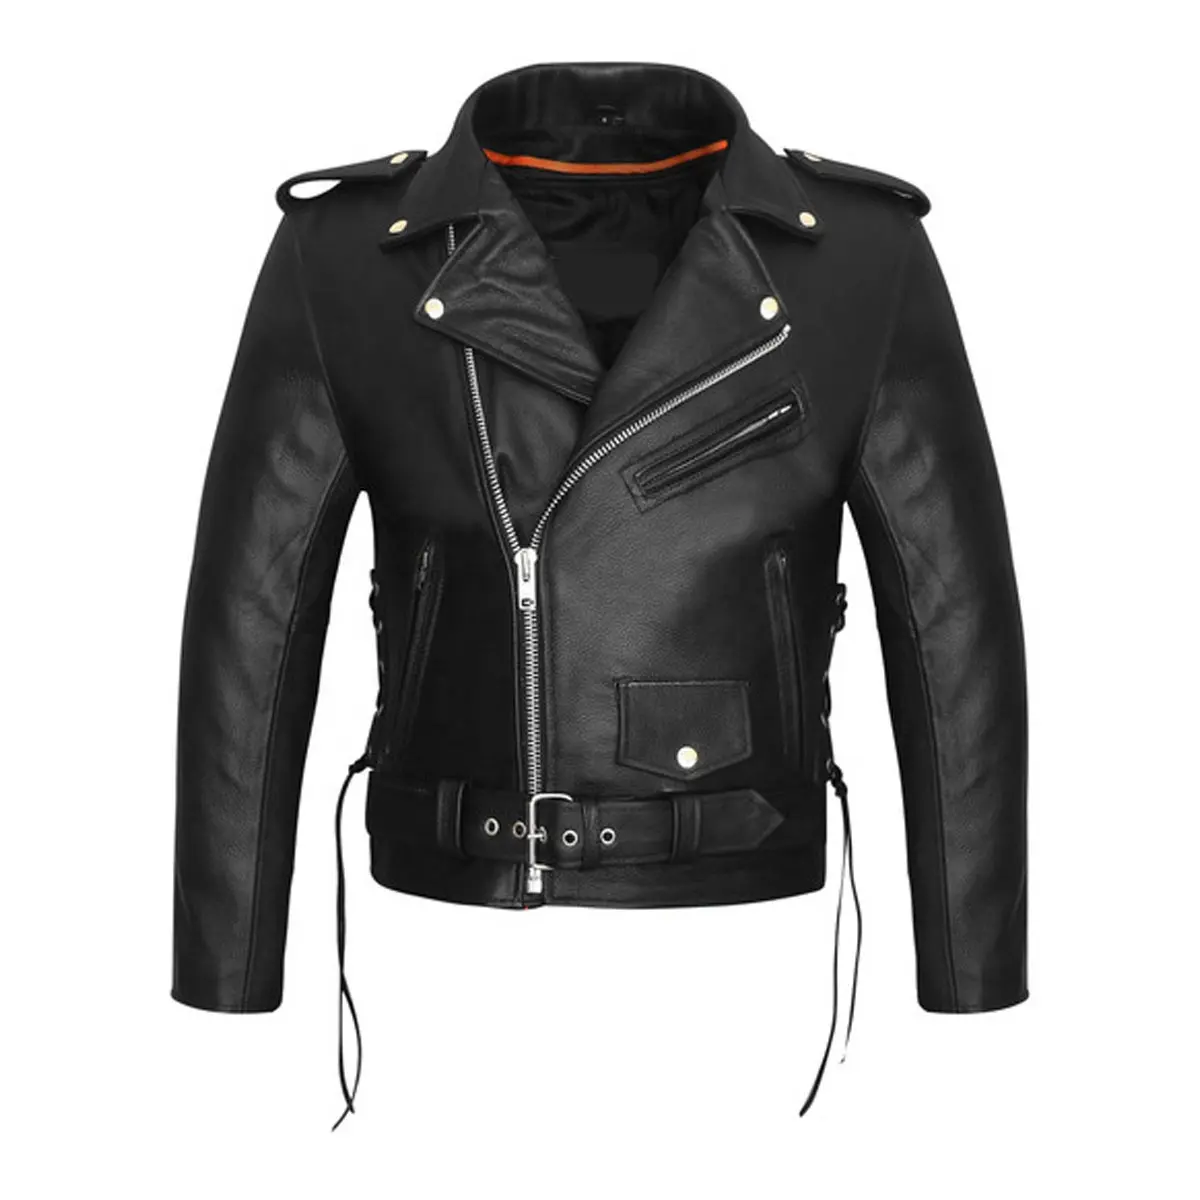 Jaqueta de couro preto para motocicleta estilo clássico premium masculina, com renda lateral e forro acolchoado removível